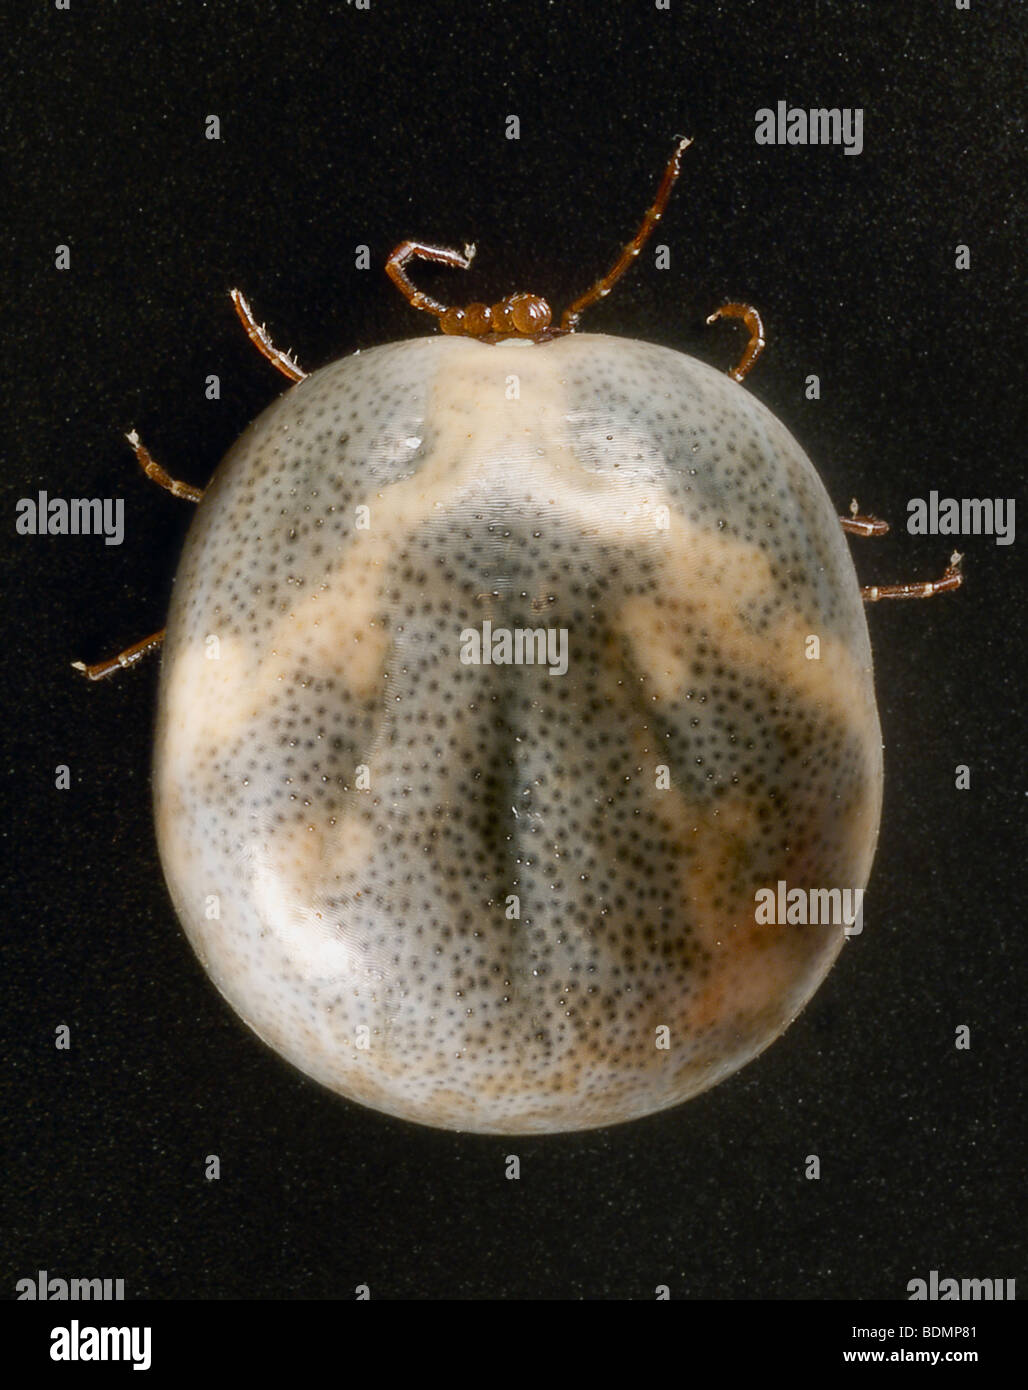 Engorged female 'lone star tick' Amblyomma americanum, dorsal view Stock Photo